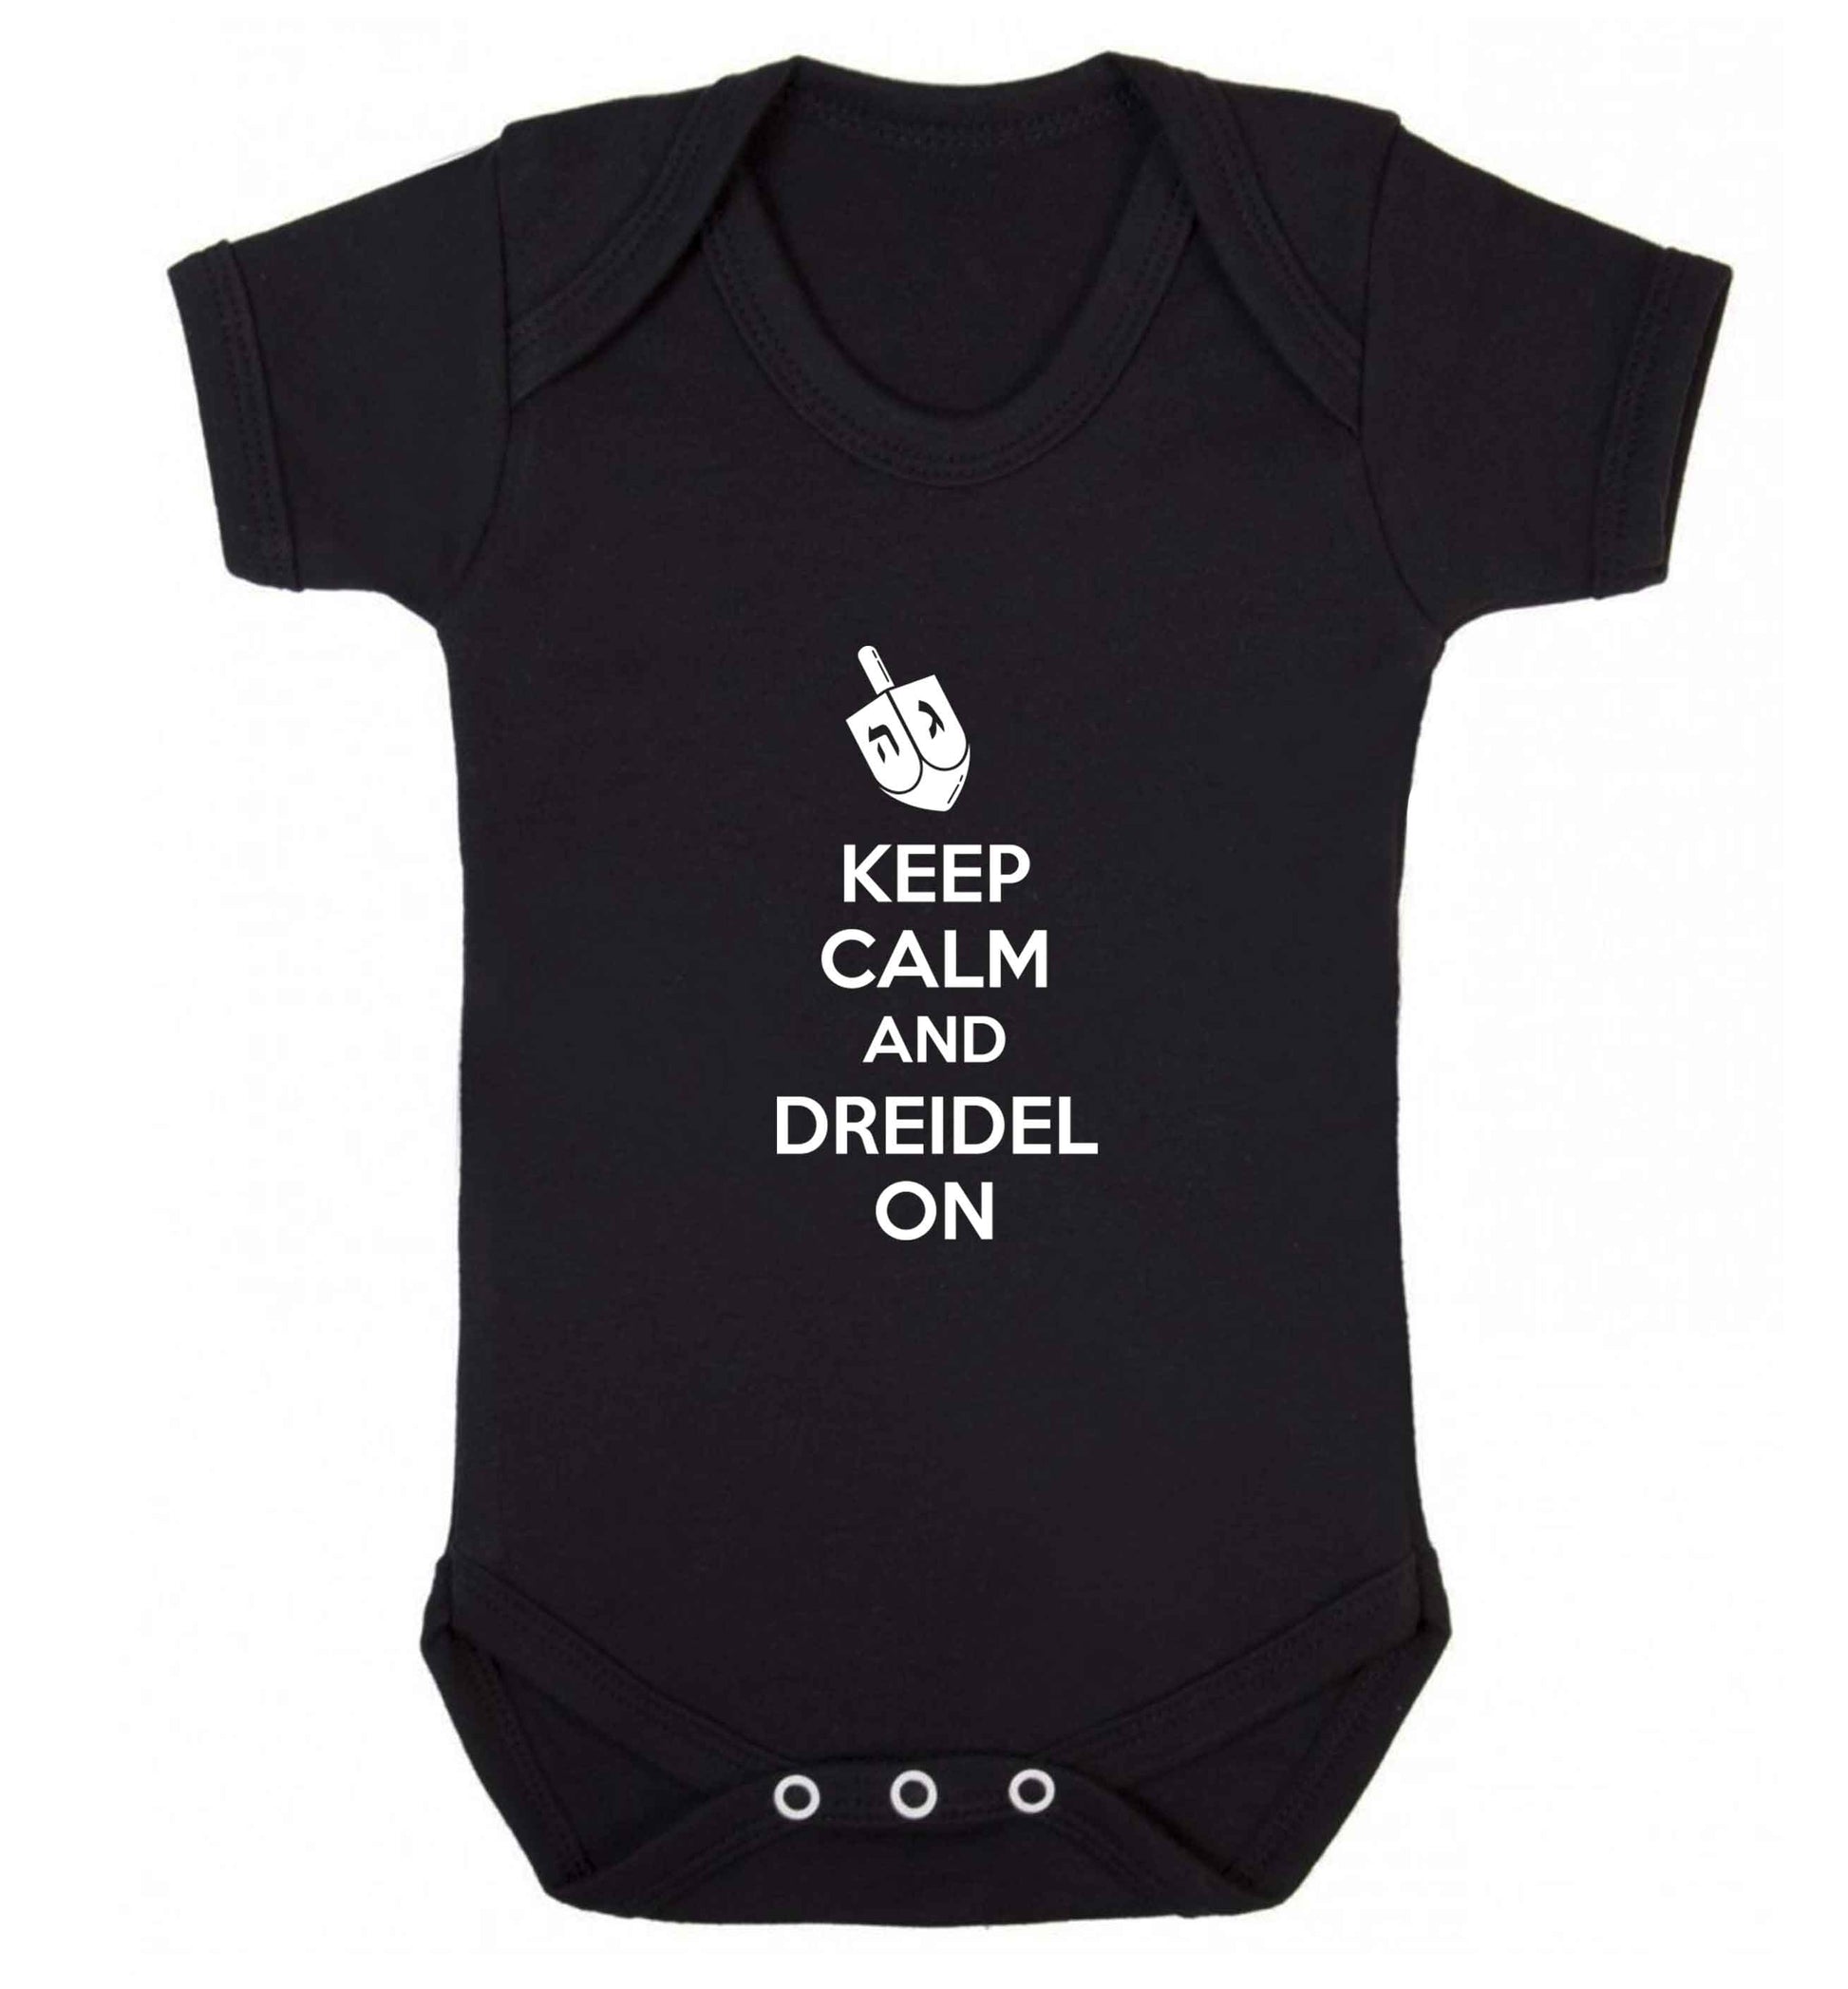 Keep calm and dreidel on baby vest black 18-24 months